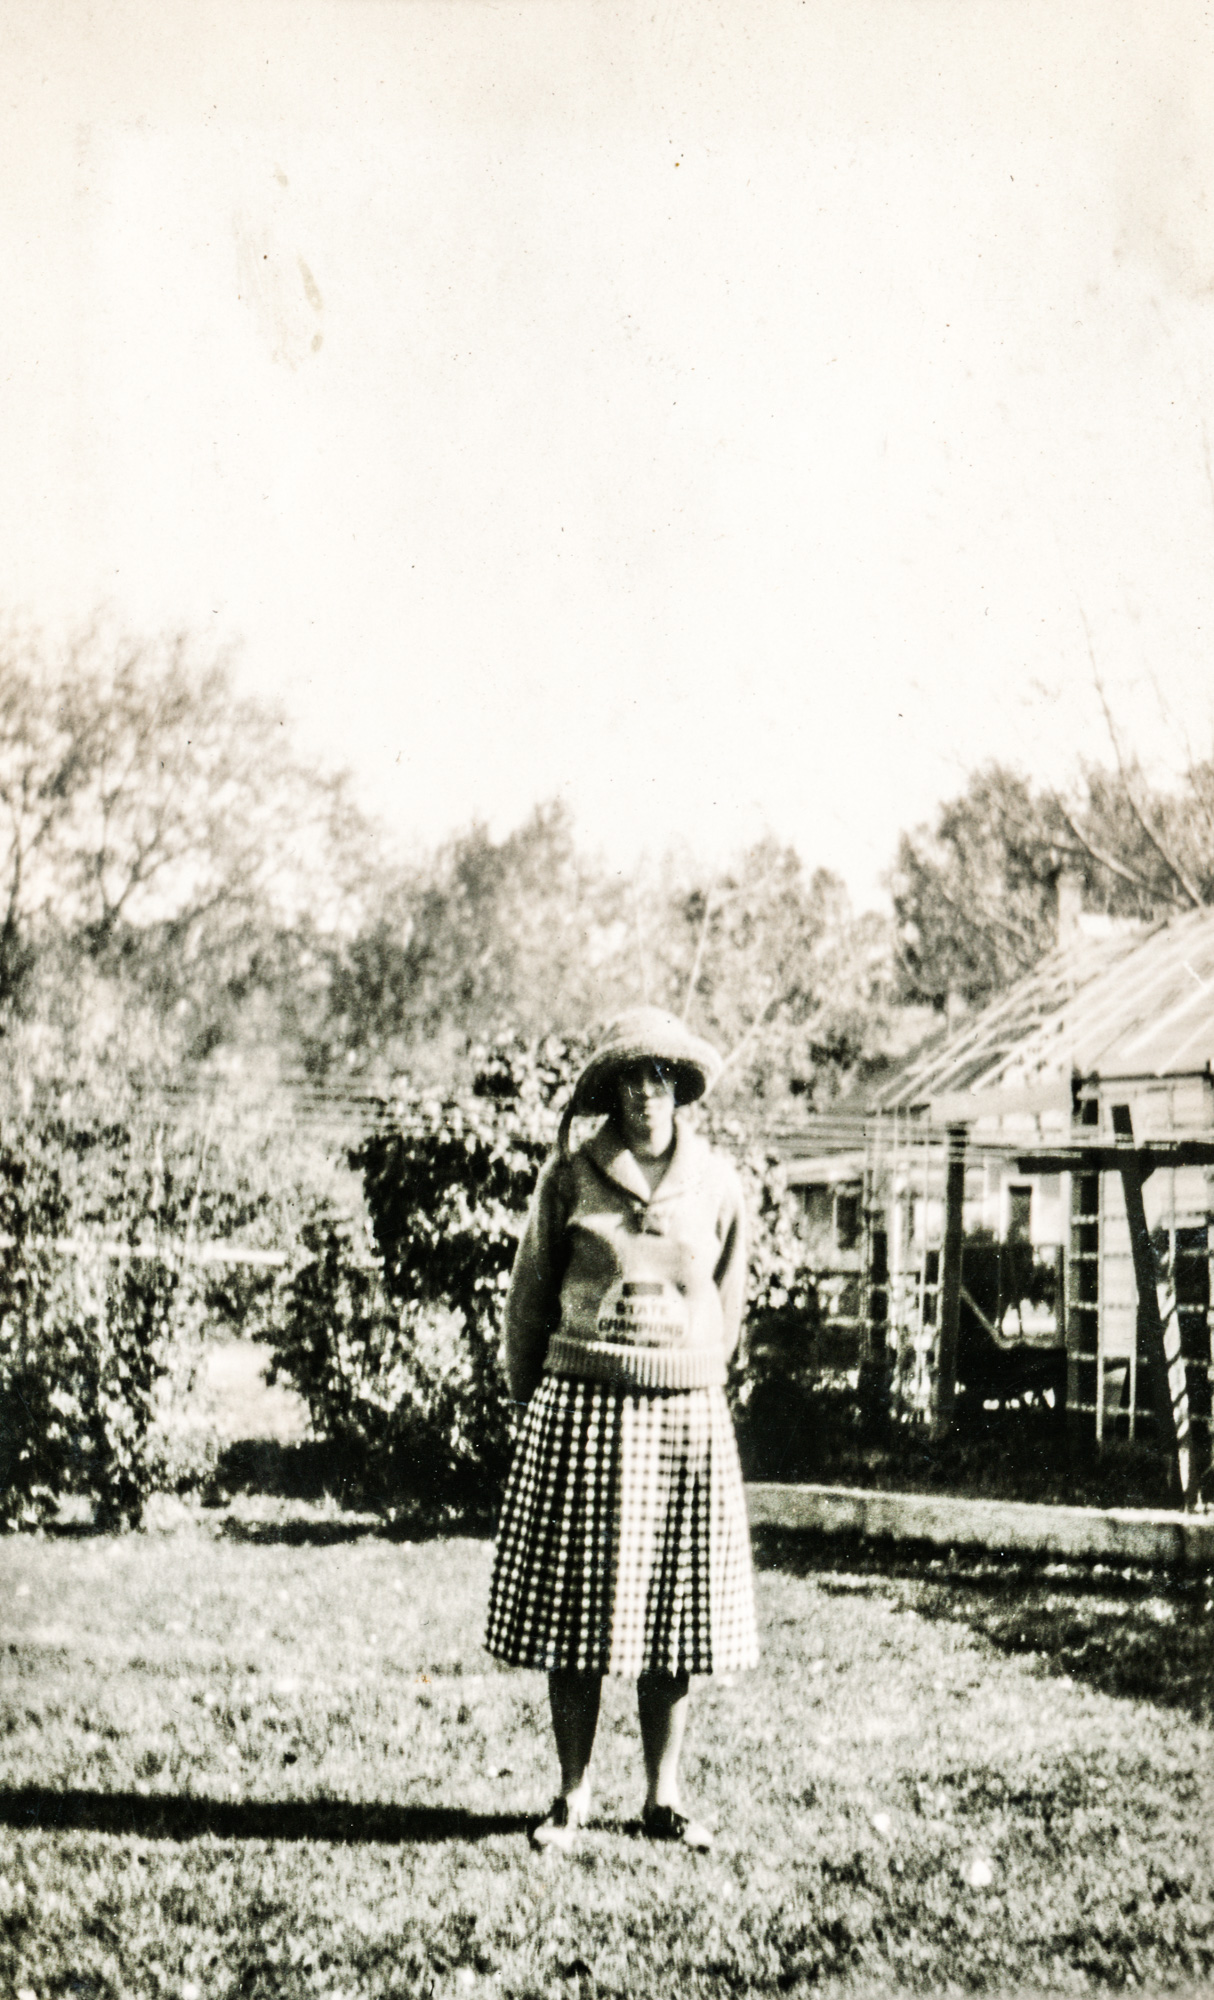 Dauth Family Archive - Circa 1920s - Elizabeth Dauth In Back Yard